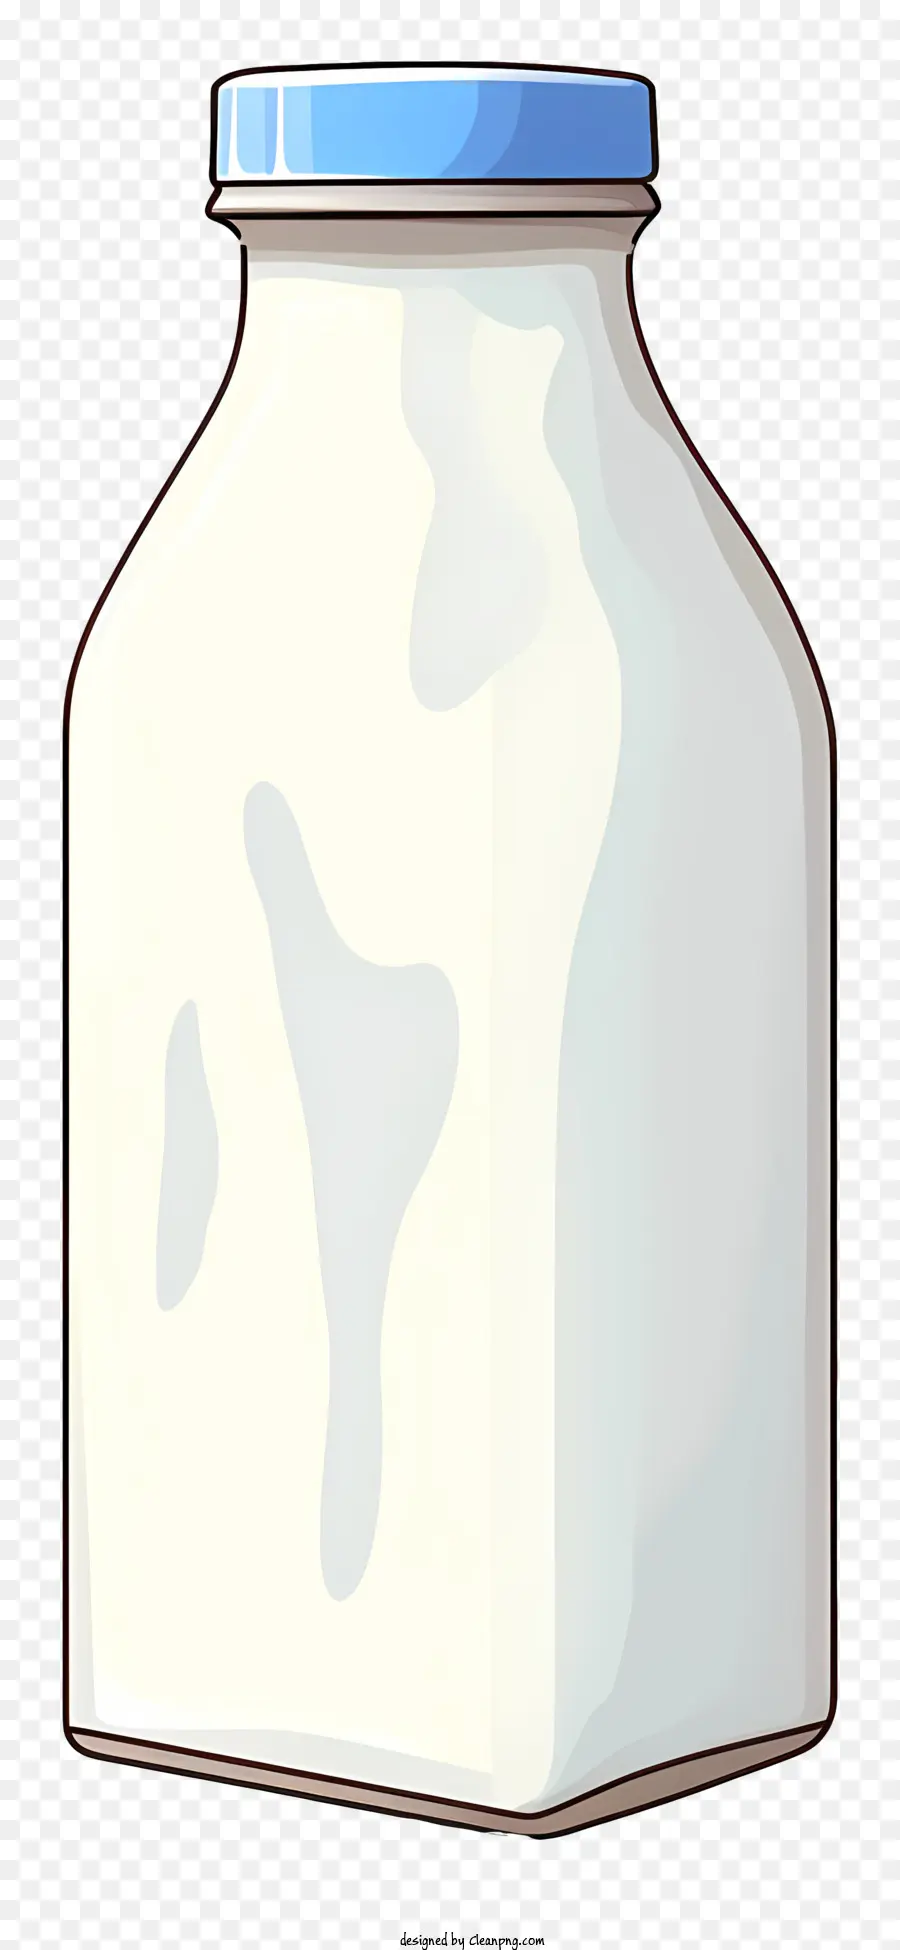 milk bottle glass bottle blue cap empty bottle black background